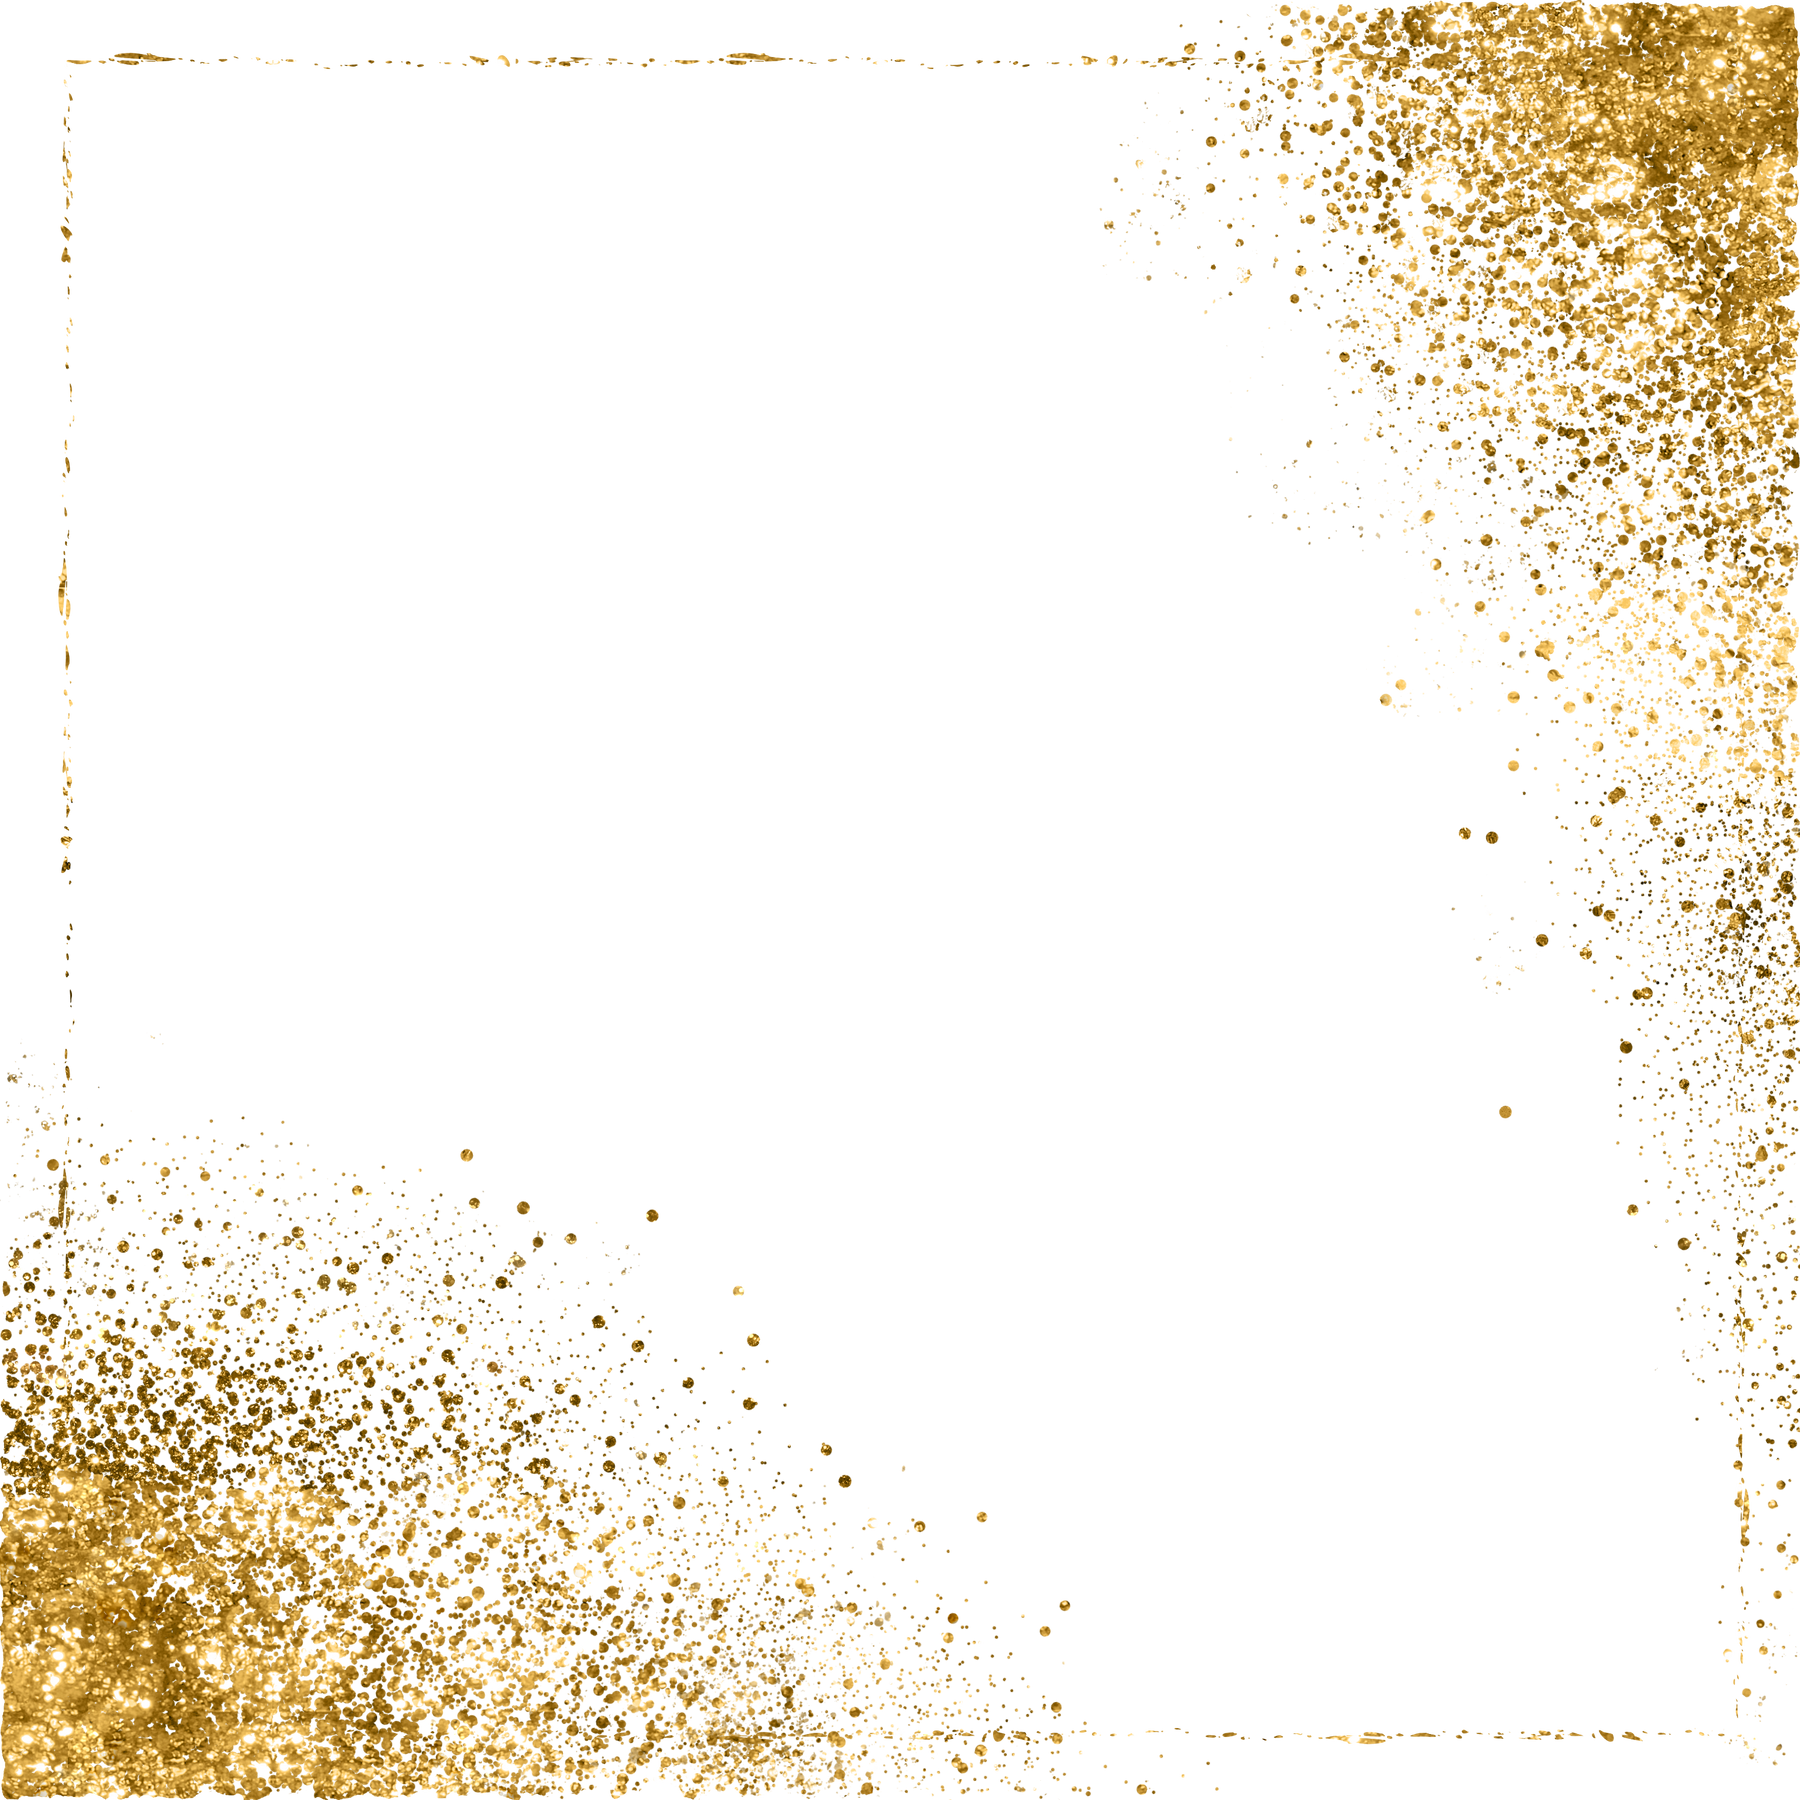 Splashed gold in a square frame